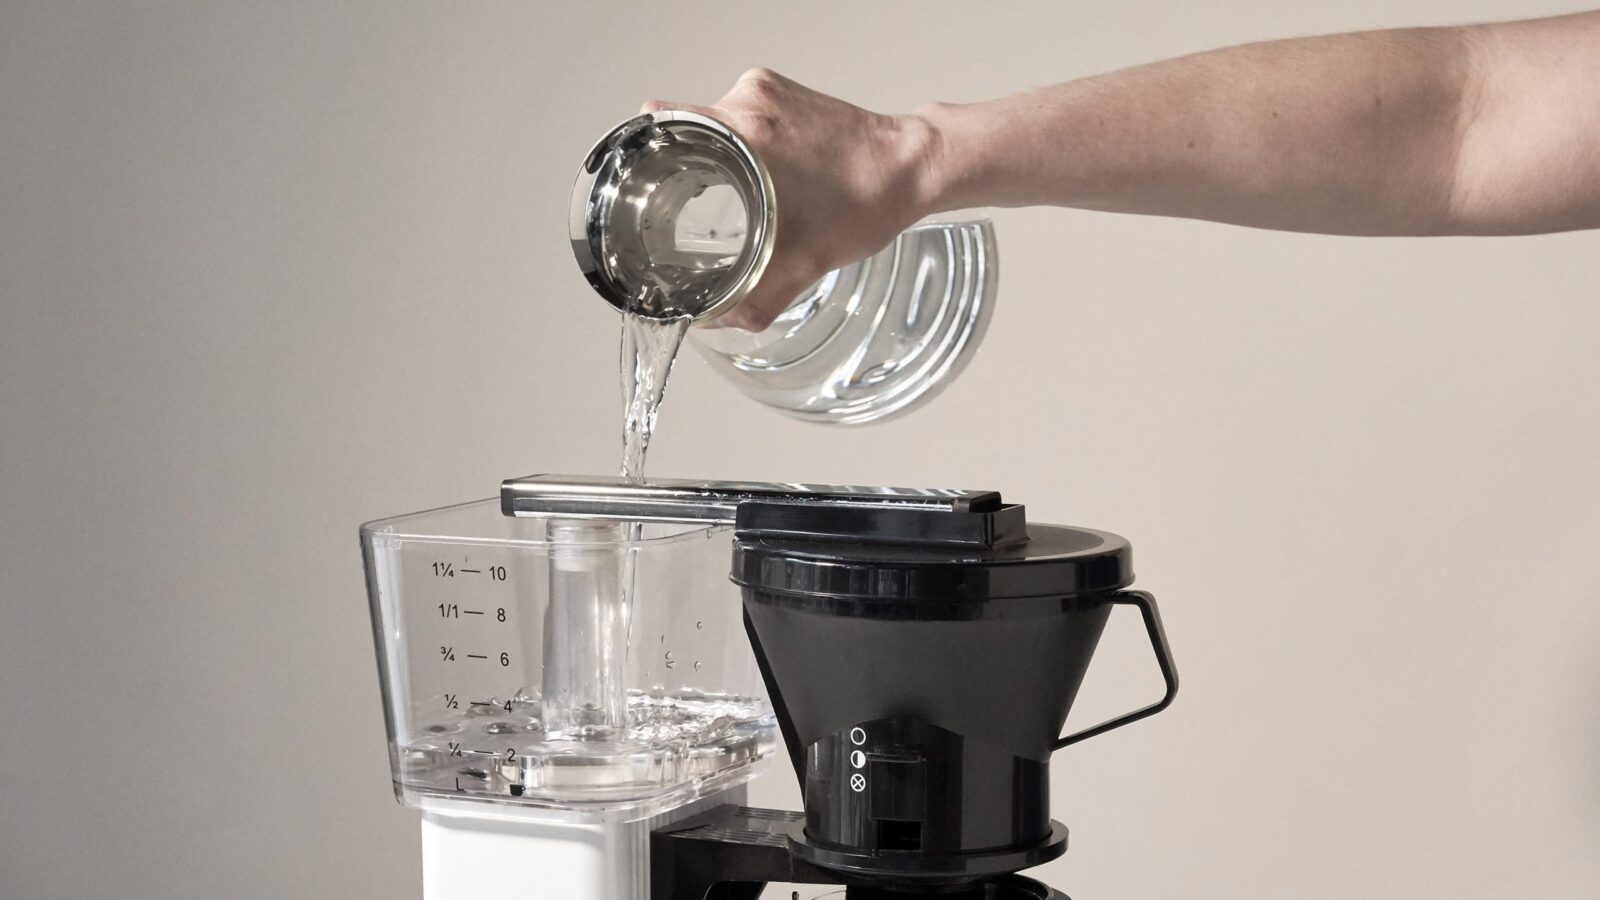 01 TRD20 Coffee Maker Water scaled - Colombia кофе для френч пресса 37,5 гр.